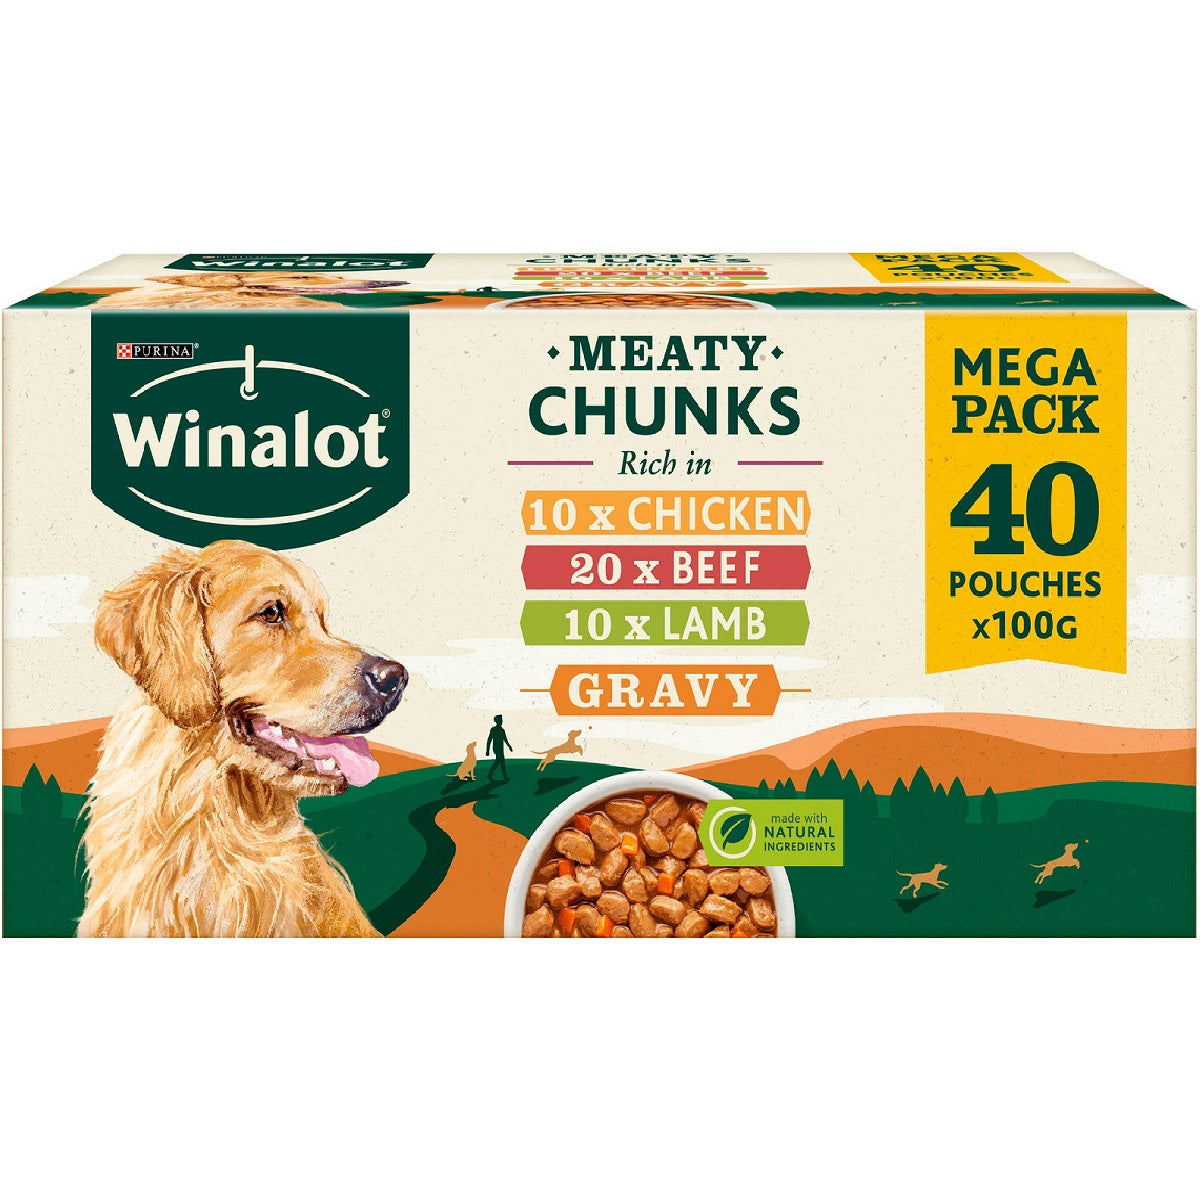 Winalot - Pouches Meaty Chunks in Gravy